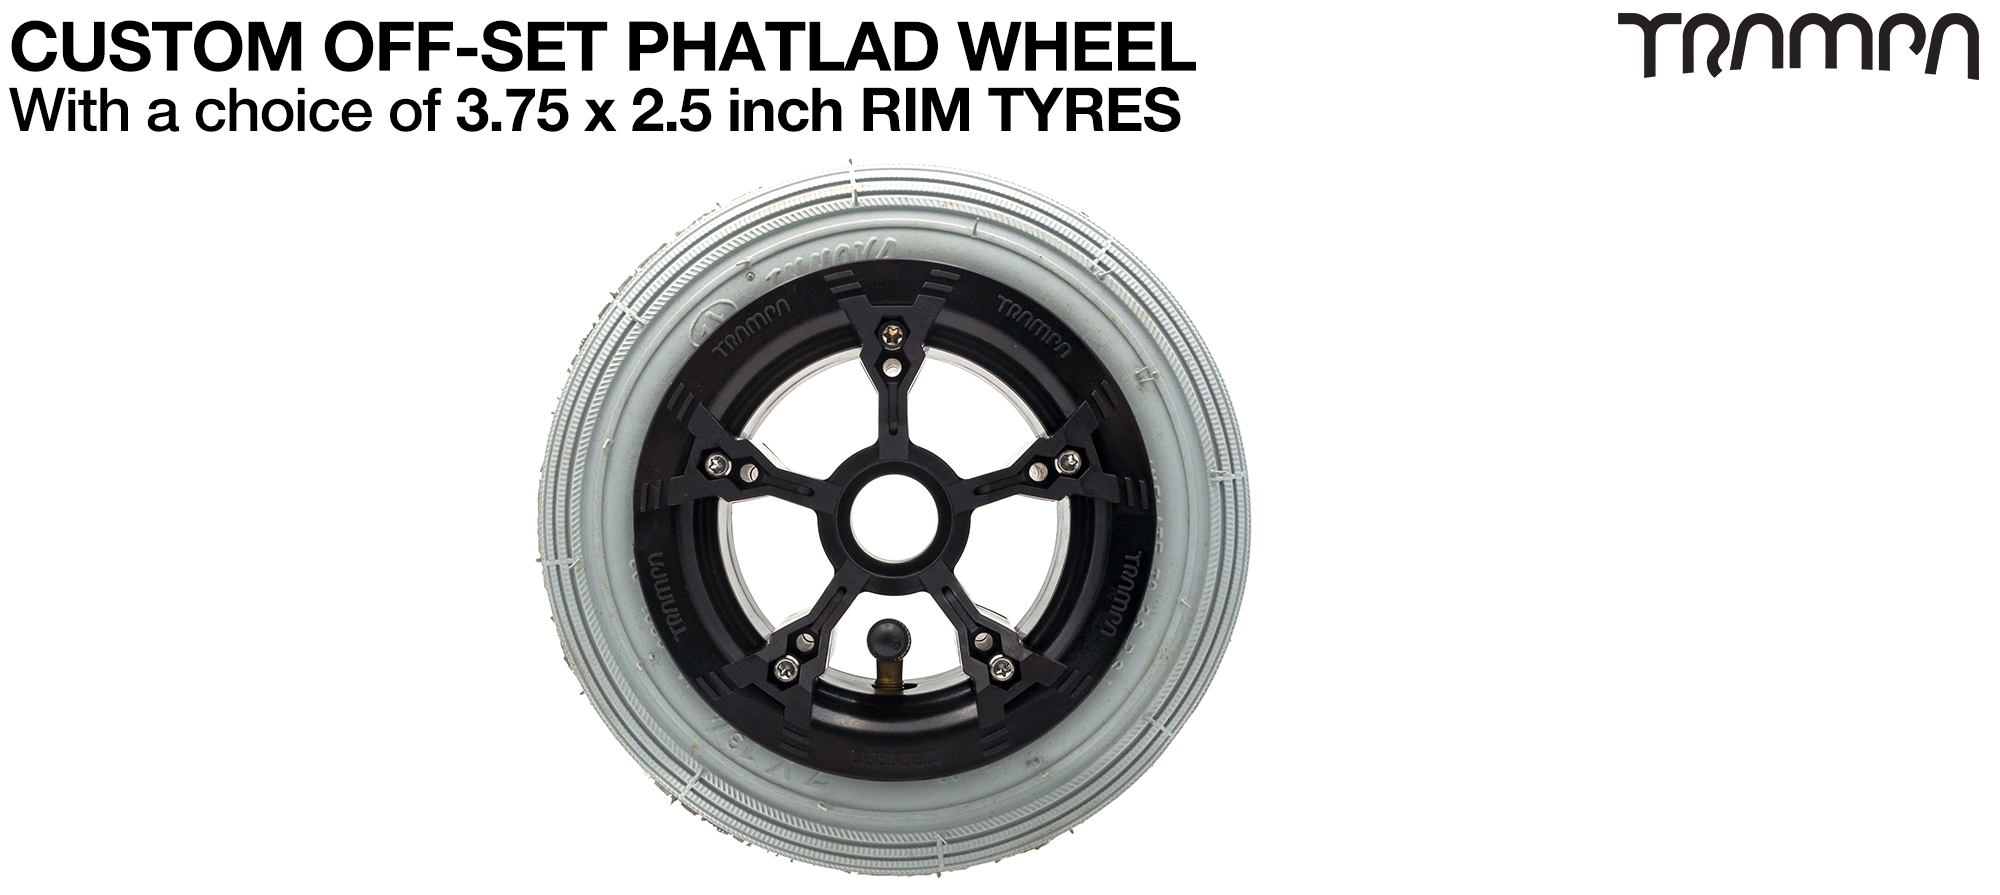 TRAMPA PHATLADS 5 spoke Wheels with 7 Inch INLINE Tyres